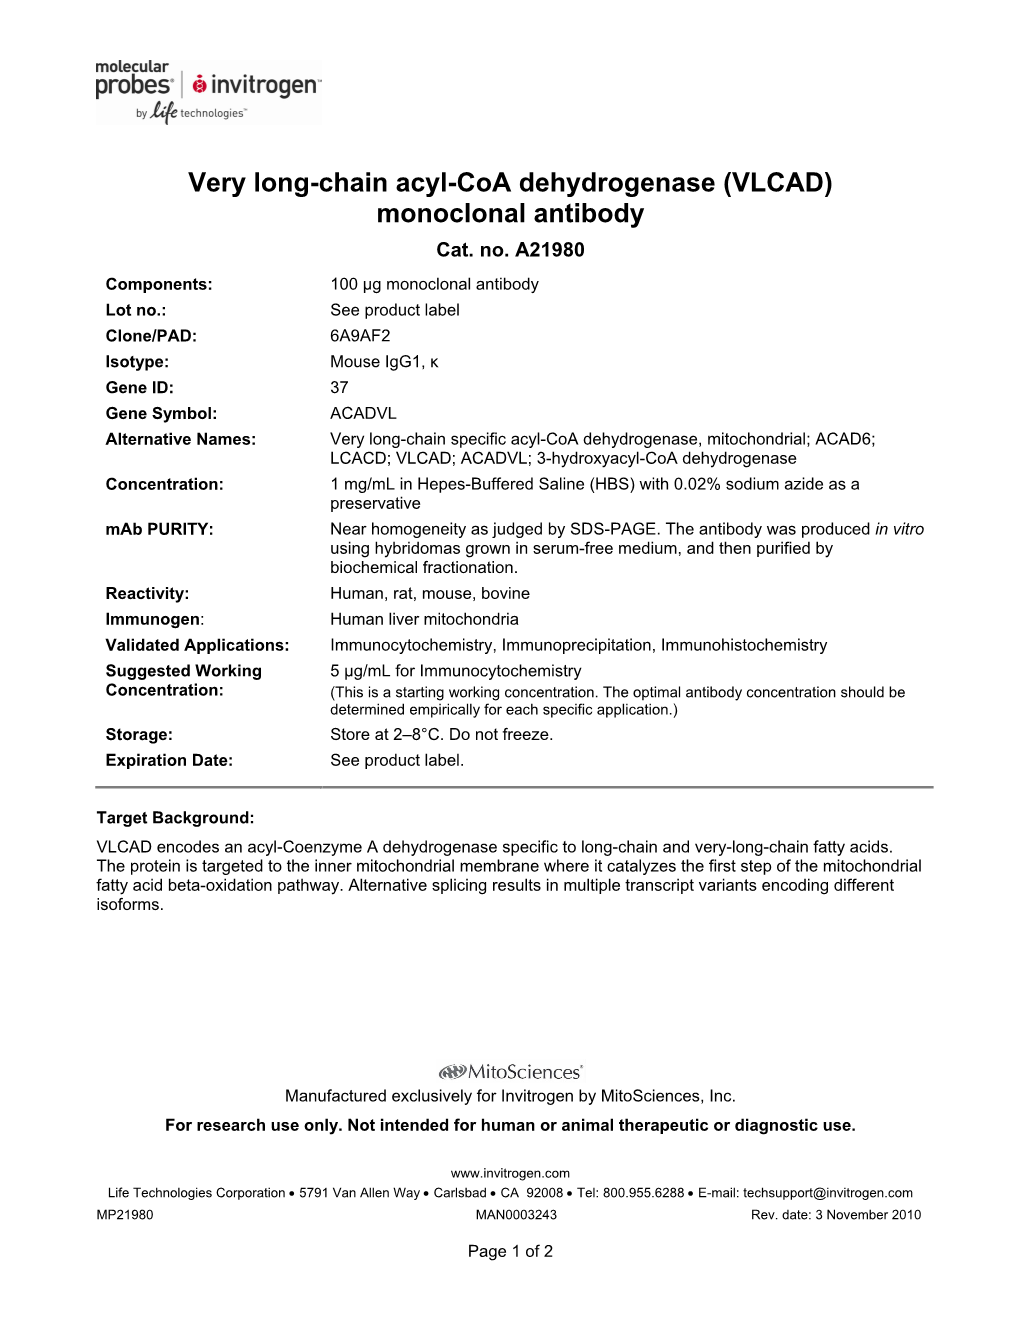 Very Long-Chain Acyl-Coa Dehydrogenase (VLCAD) Monoclonal Antibody Cat